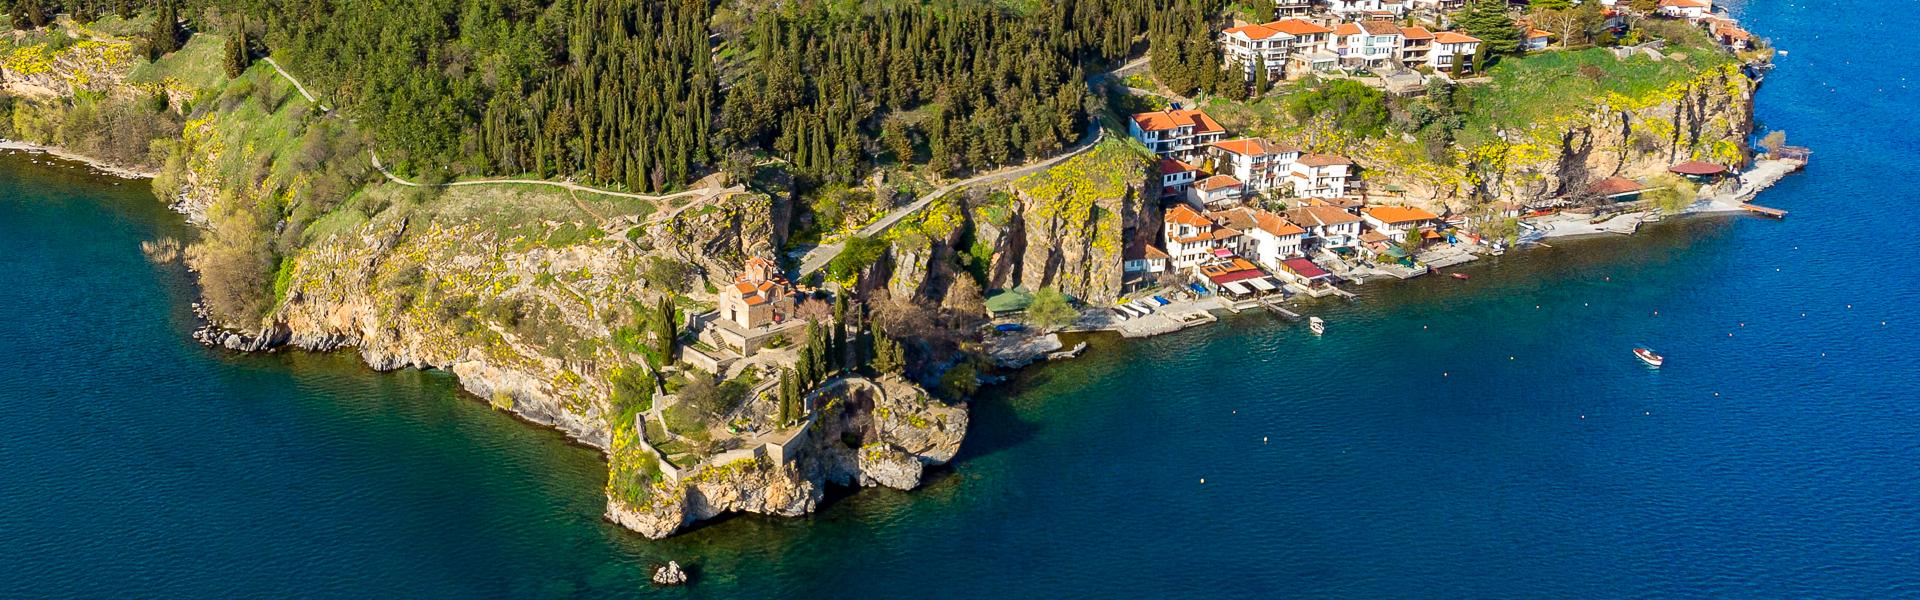 Ohrid am Ohridsee |  Slavcho Malezanov, Unsplash / Chamleon